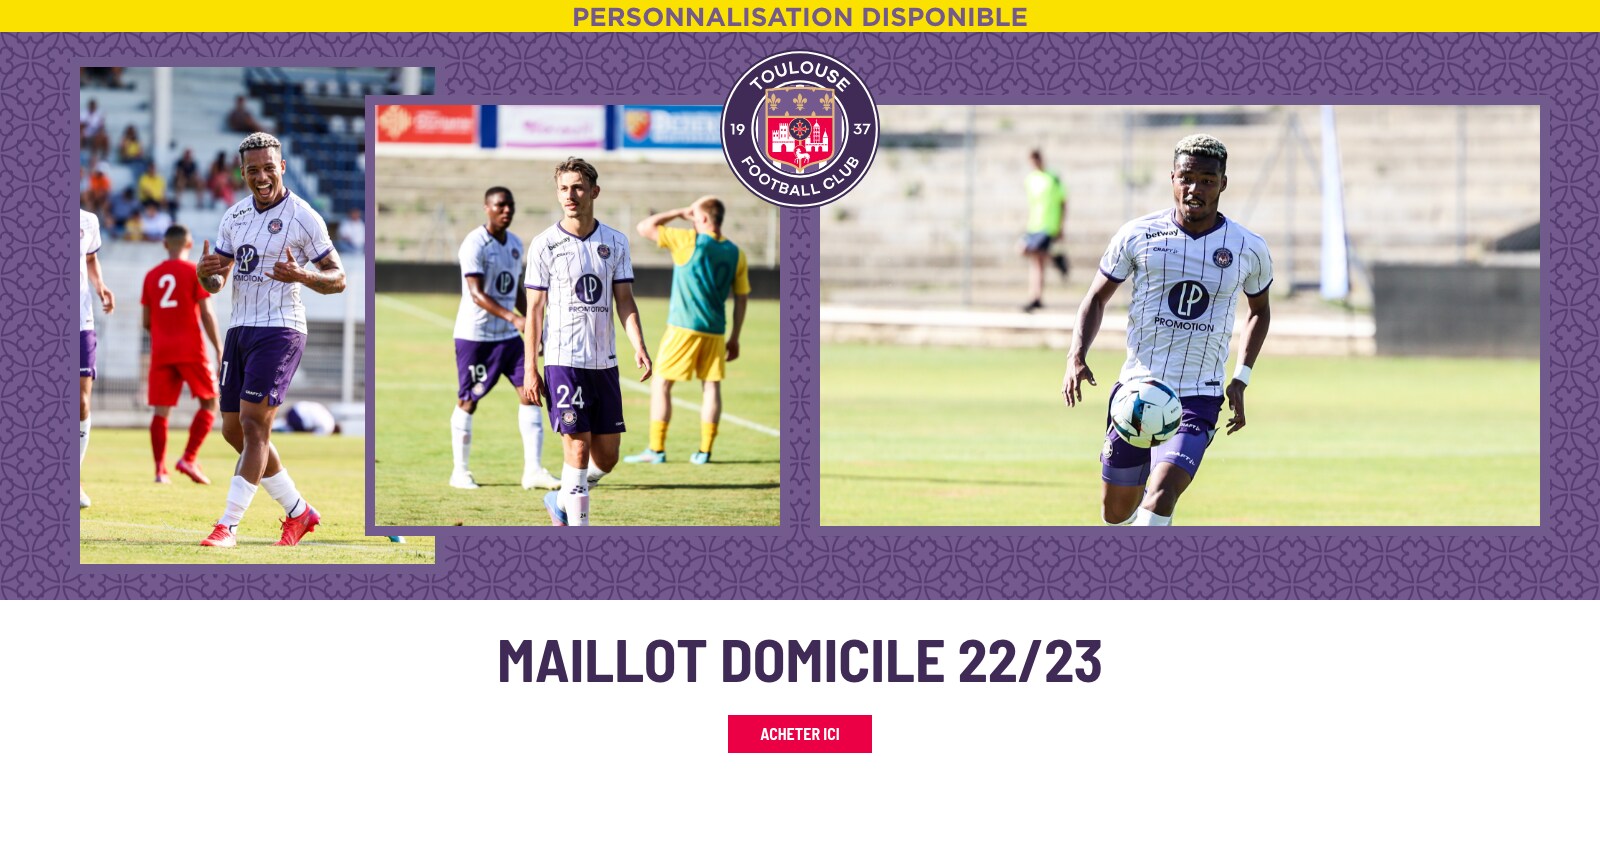 Maillot Domicile - Acheter Ici